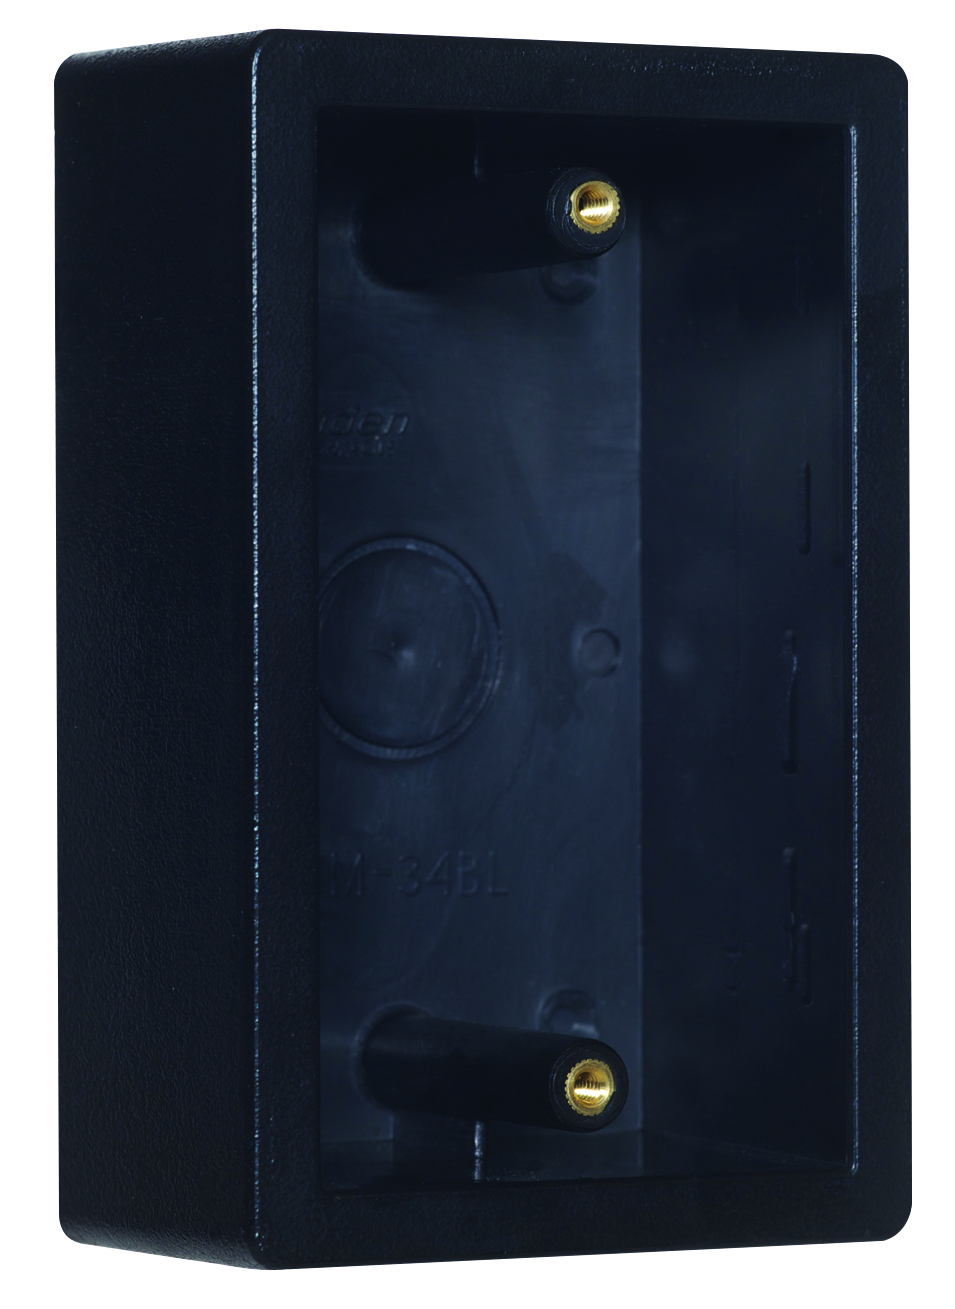 CM-160, CM-170, CM-180 Series: Automatic Operator Control Key Switches - Automatic Door Control Switches - Activation